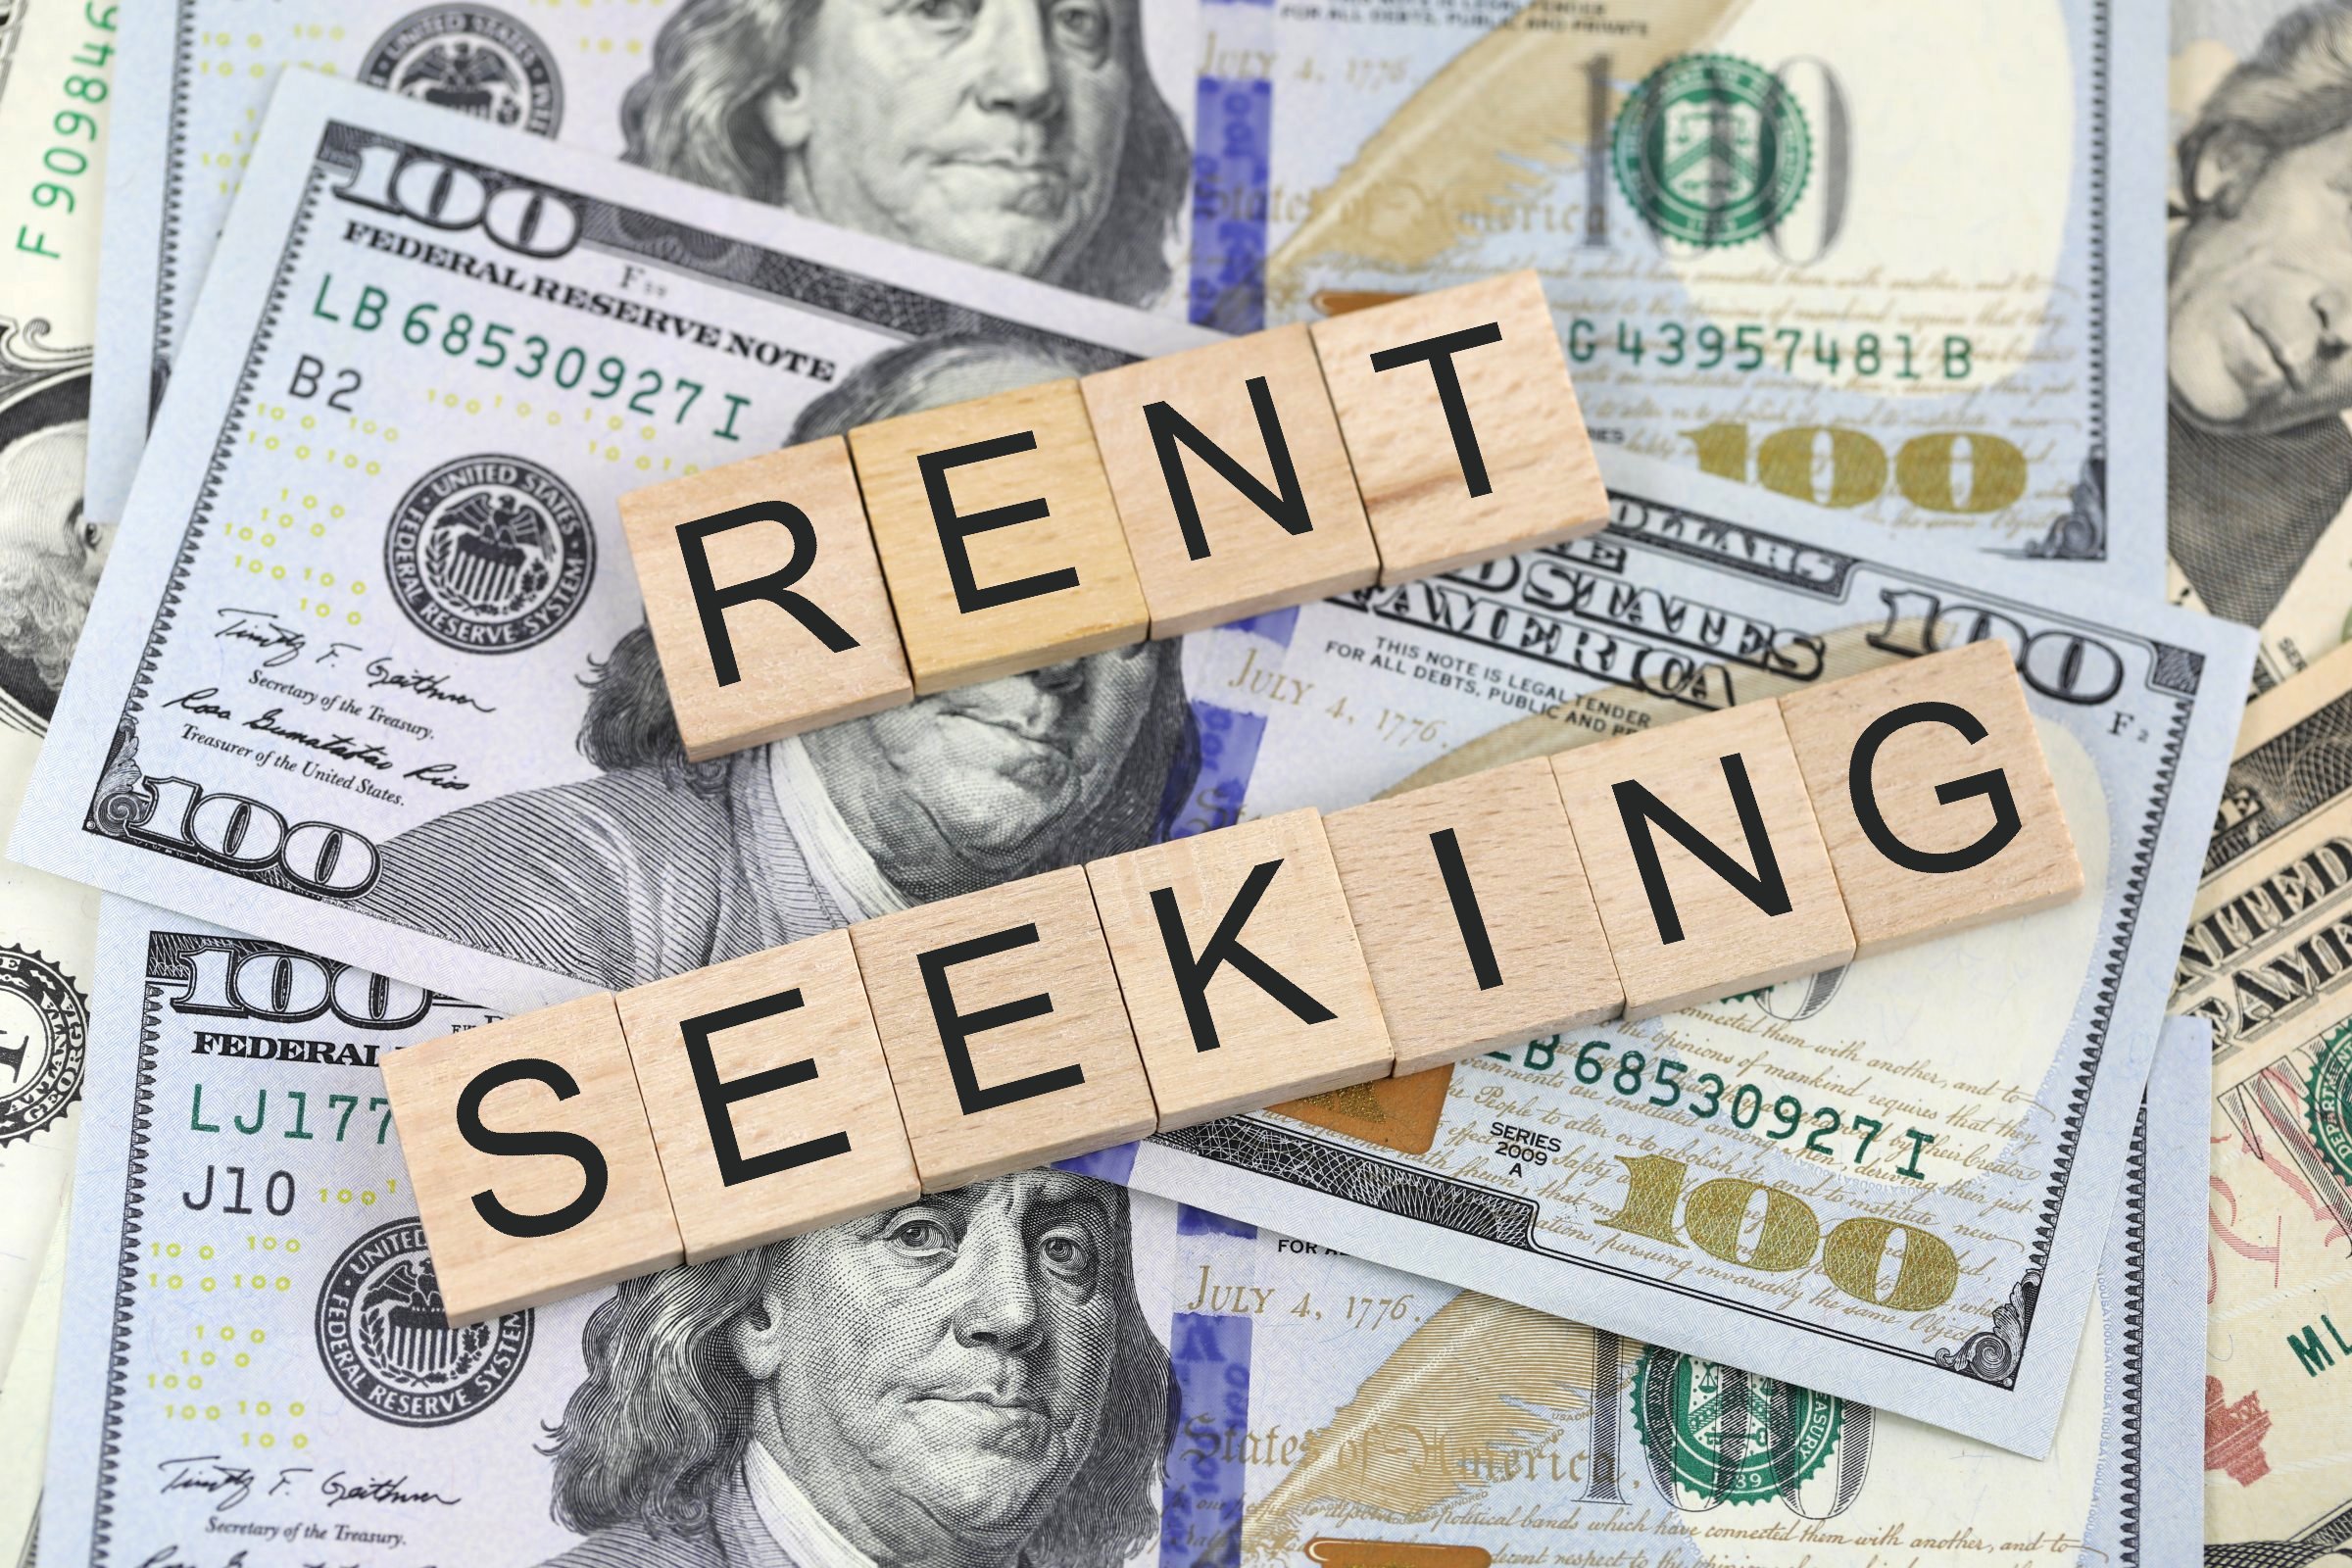 rent seeking